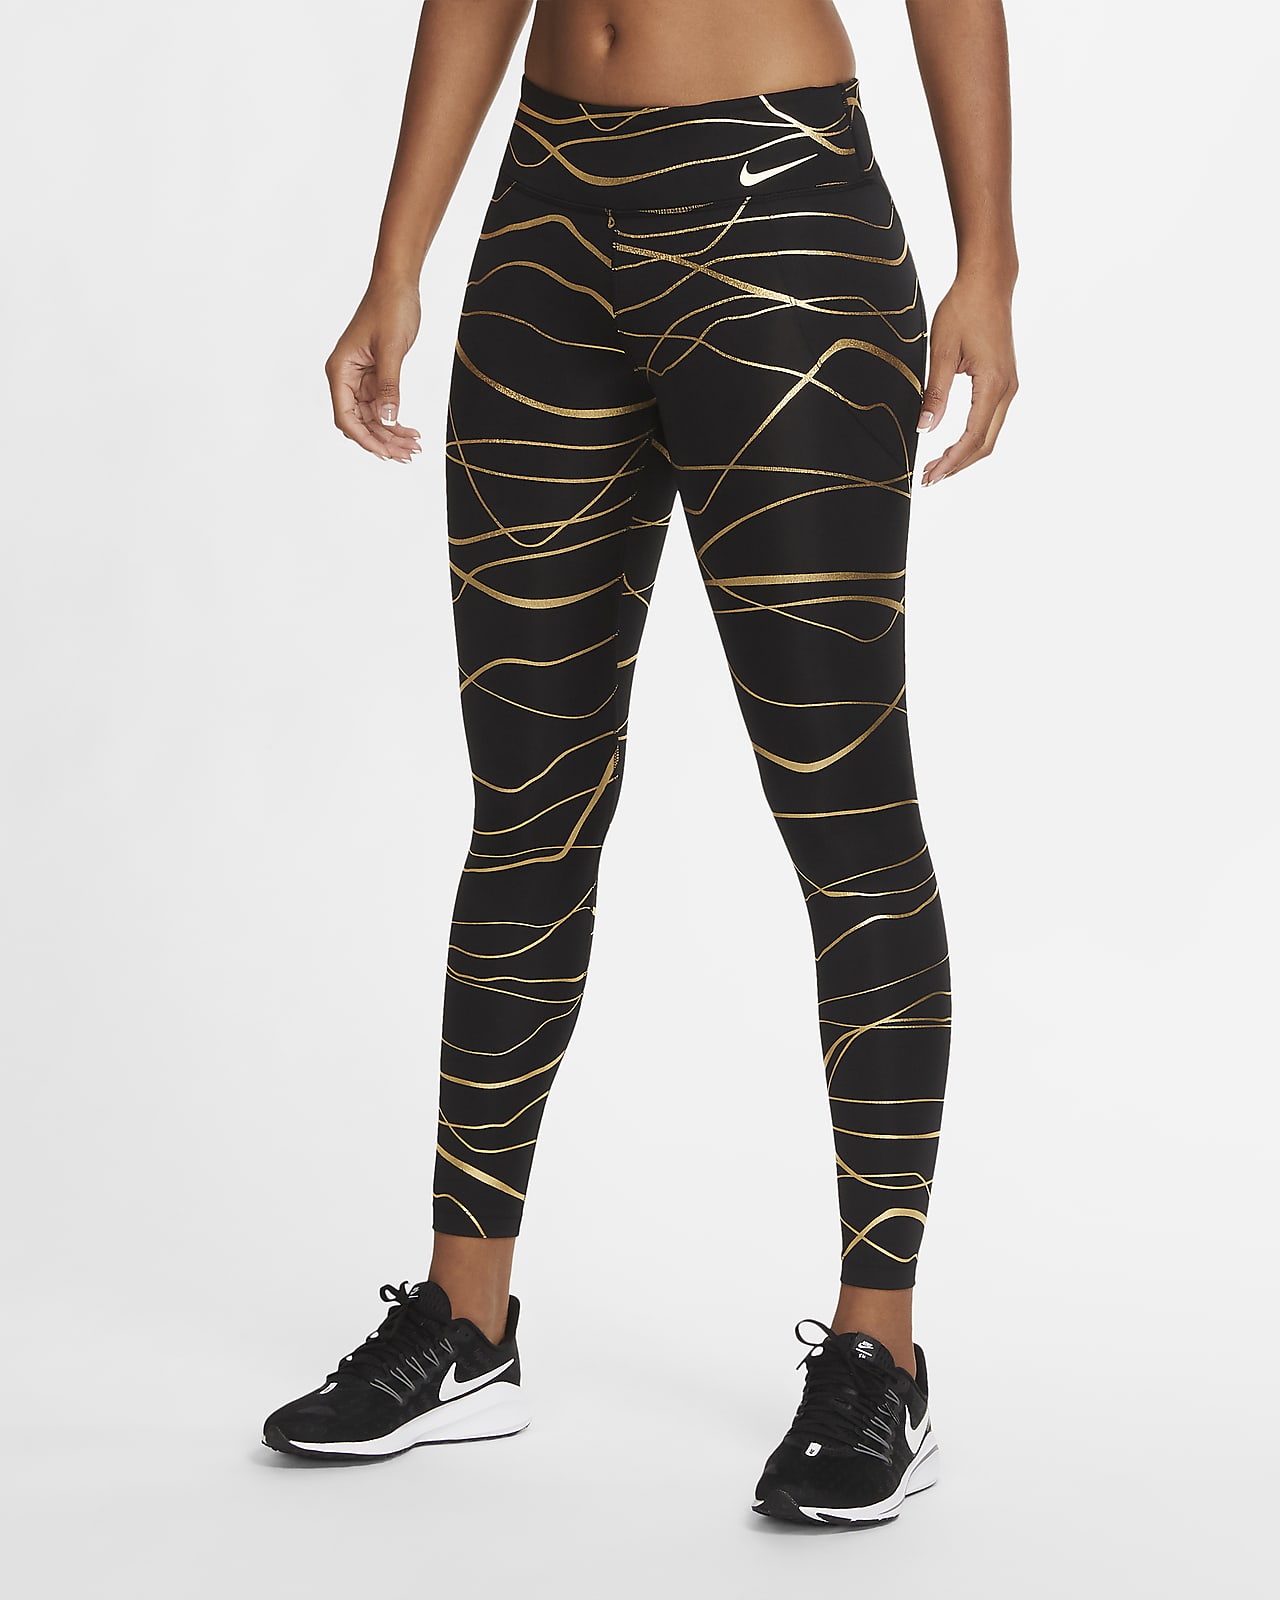 Women's Nike Icon Clash Leggings XS Black Gym Running Training